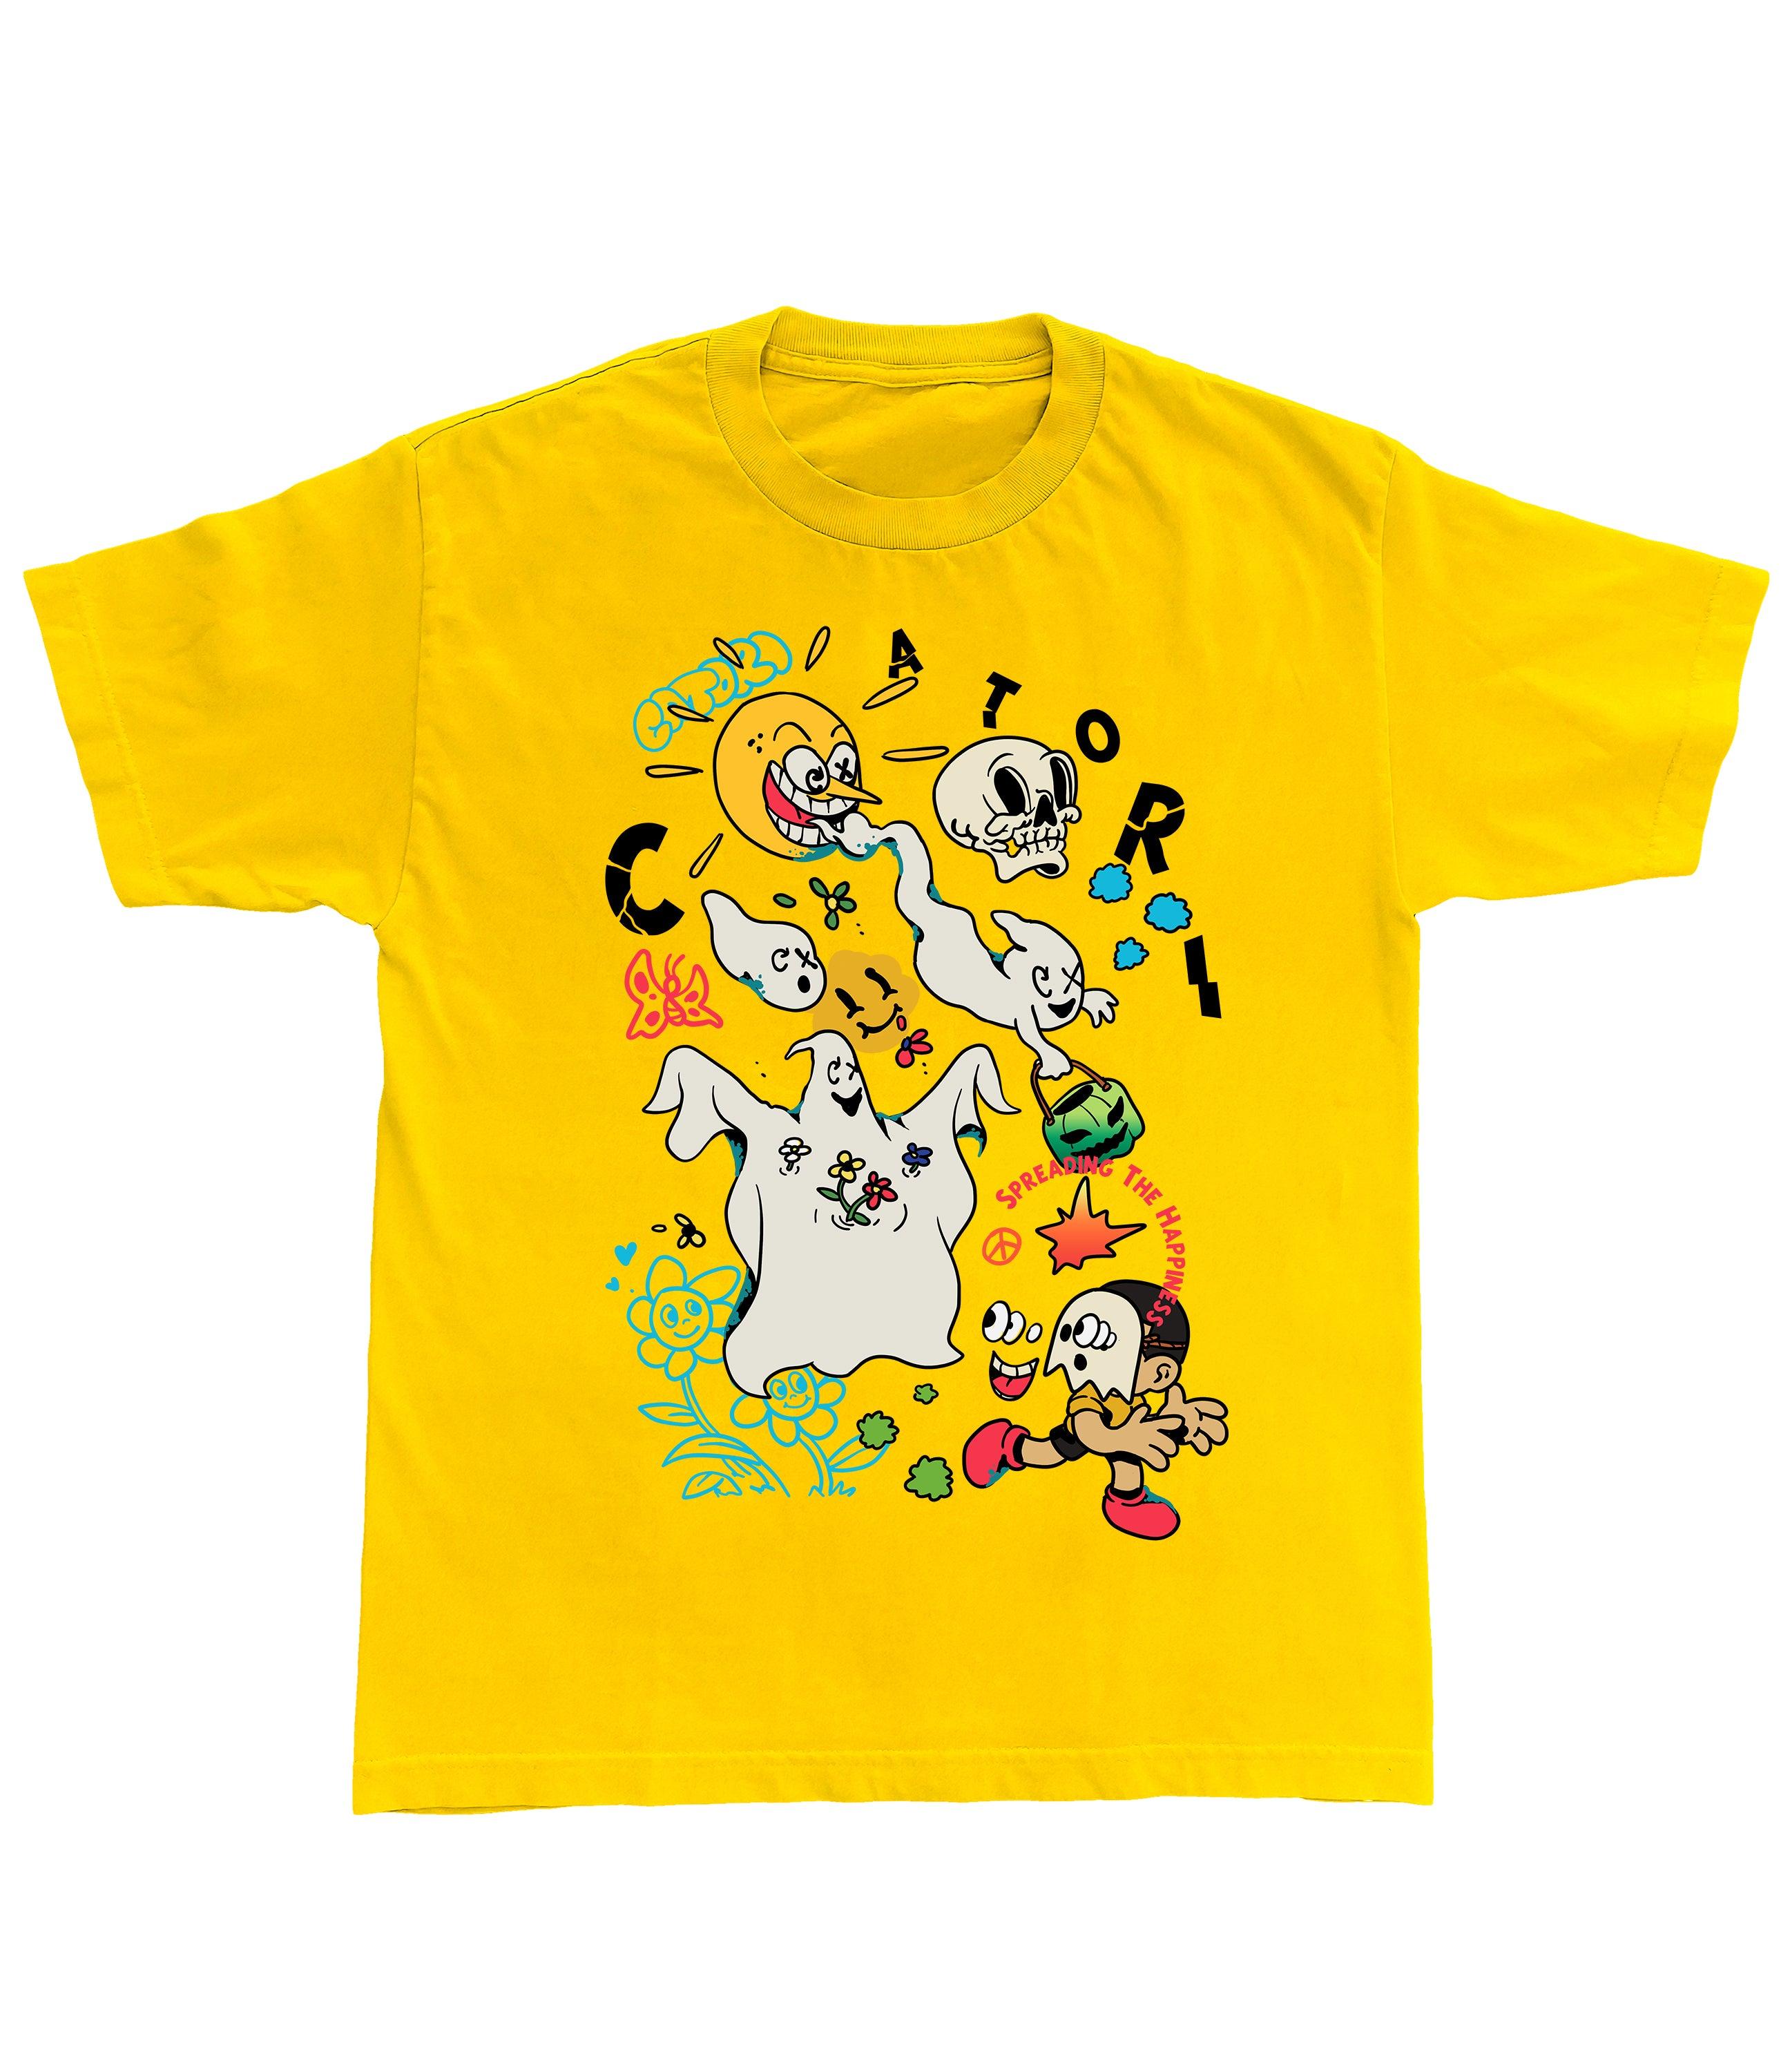 Happiness T-Shirt at Catori Clothing | Graphic & Anime Tees, Hoodies & Sweatshirts 